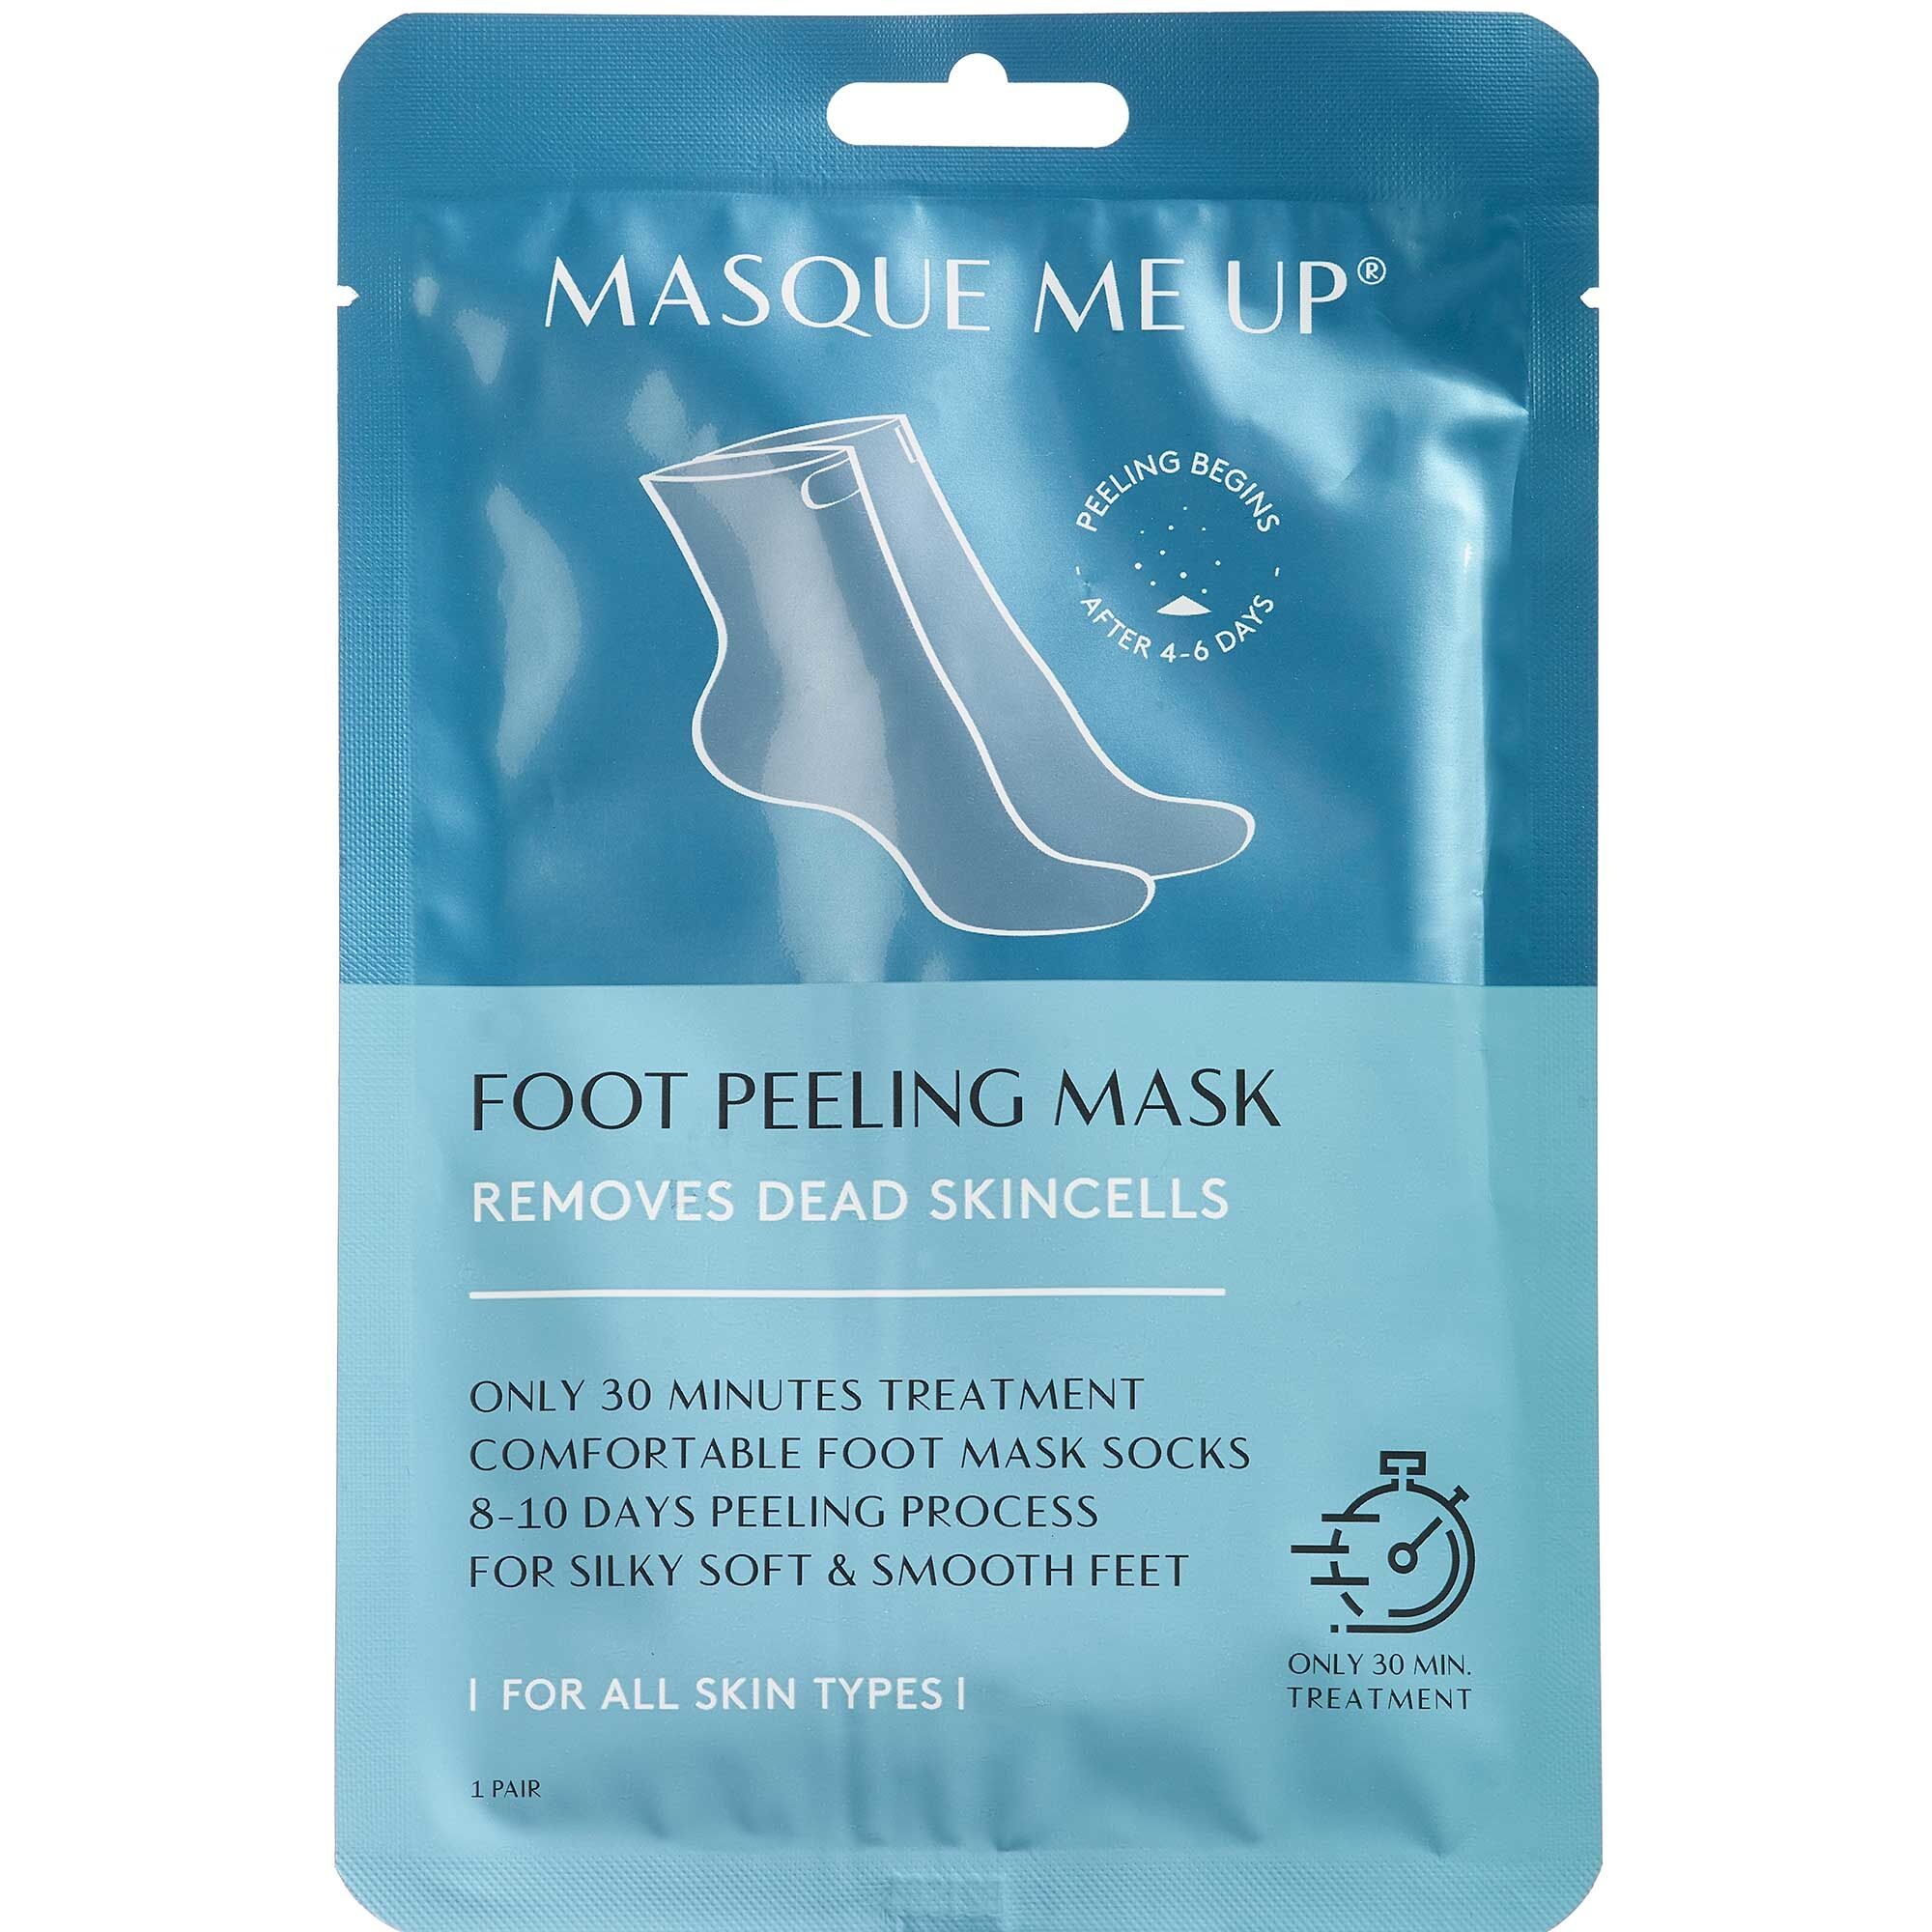 Masque Up Masque Up Foot Peeling Mask